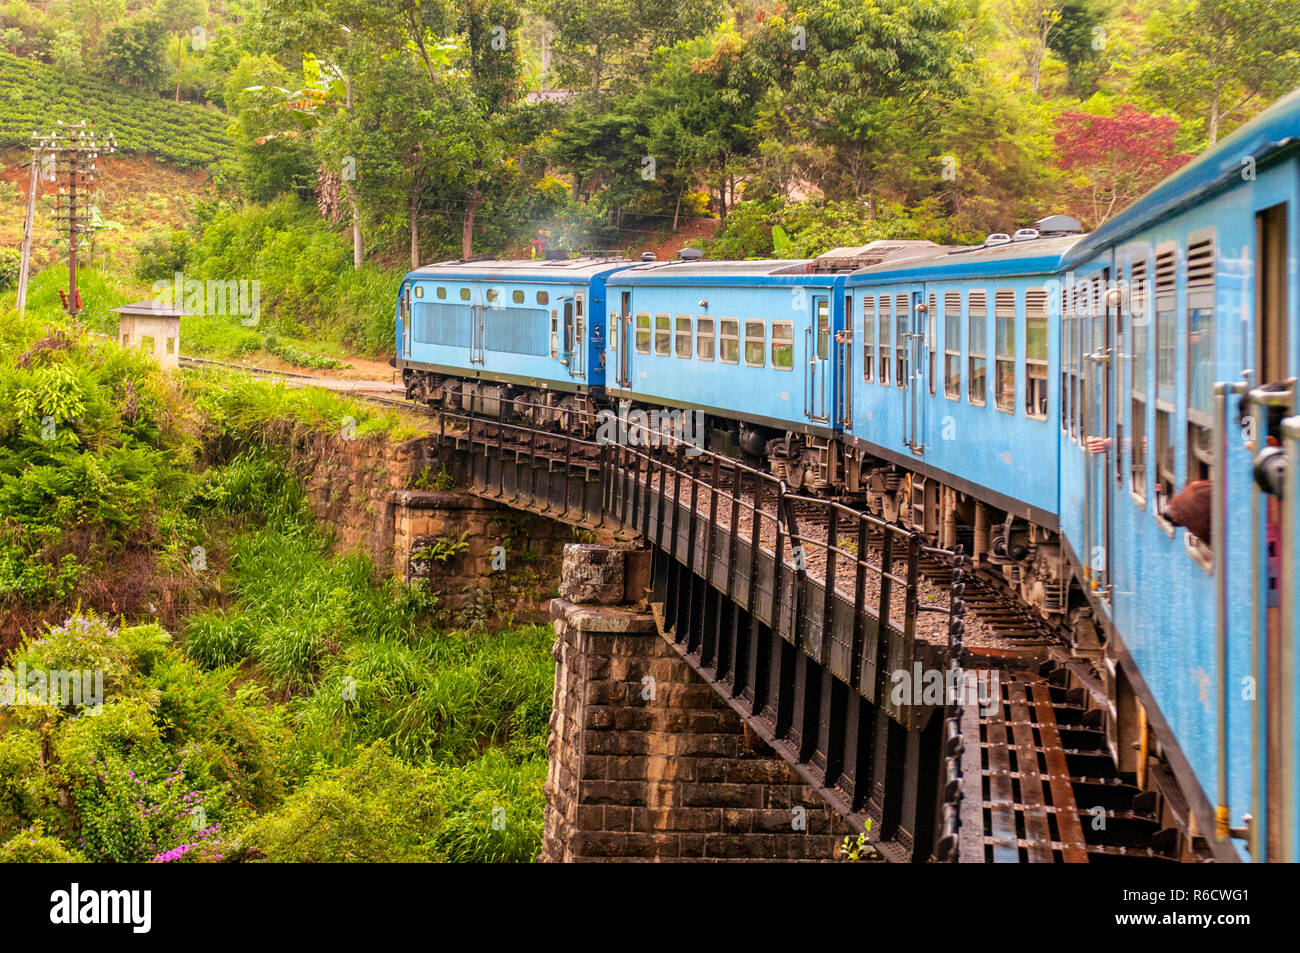 Train From Nuwara Eliya To Kandy Among Tea Plantations In The Highlands Of Sri Lanka Stock Photo